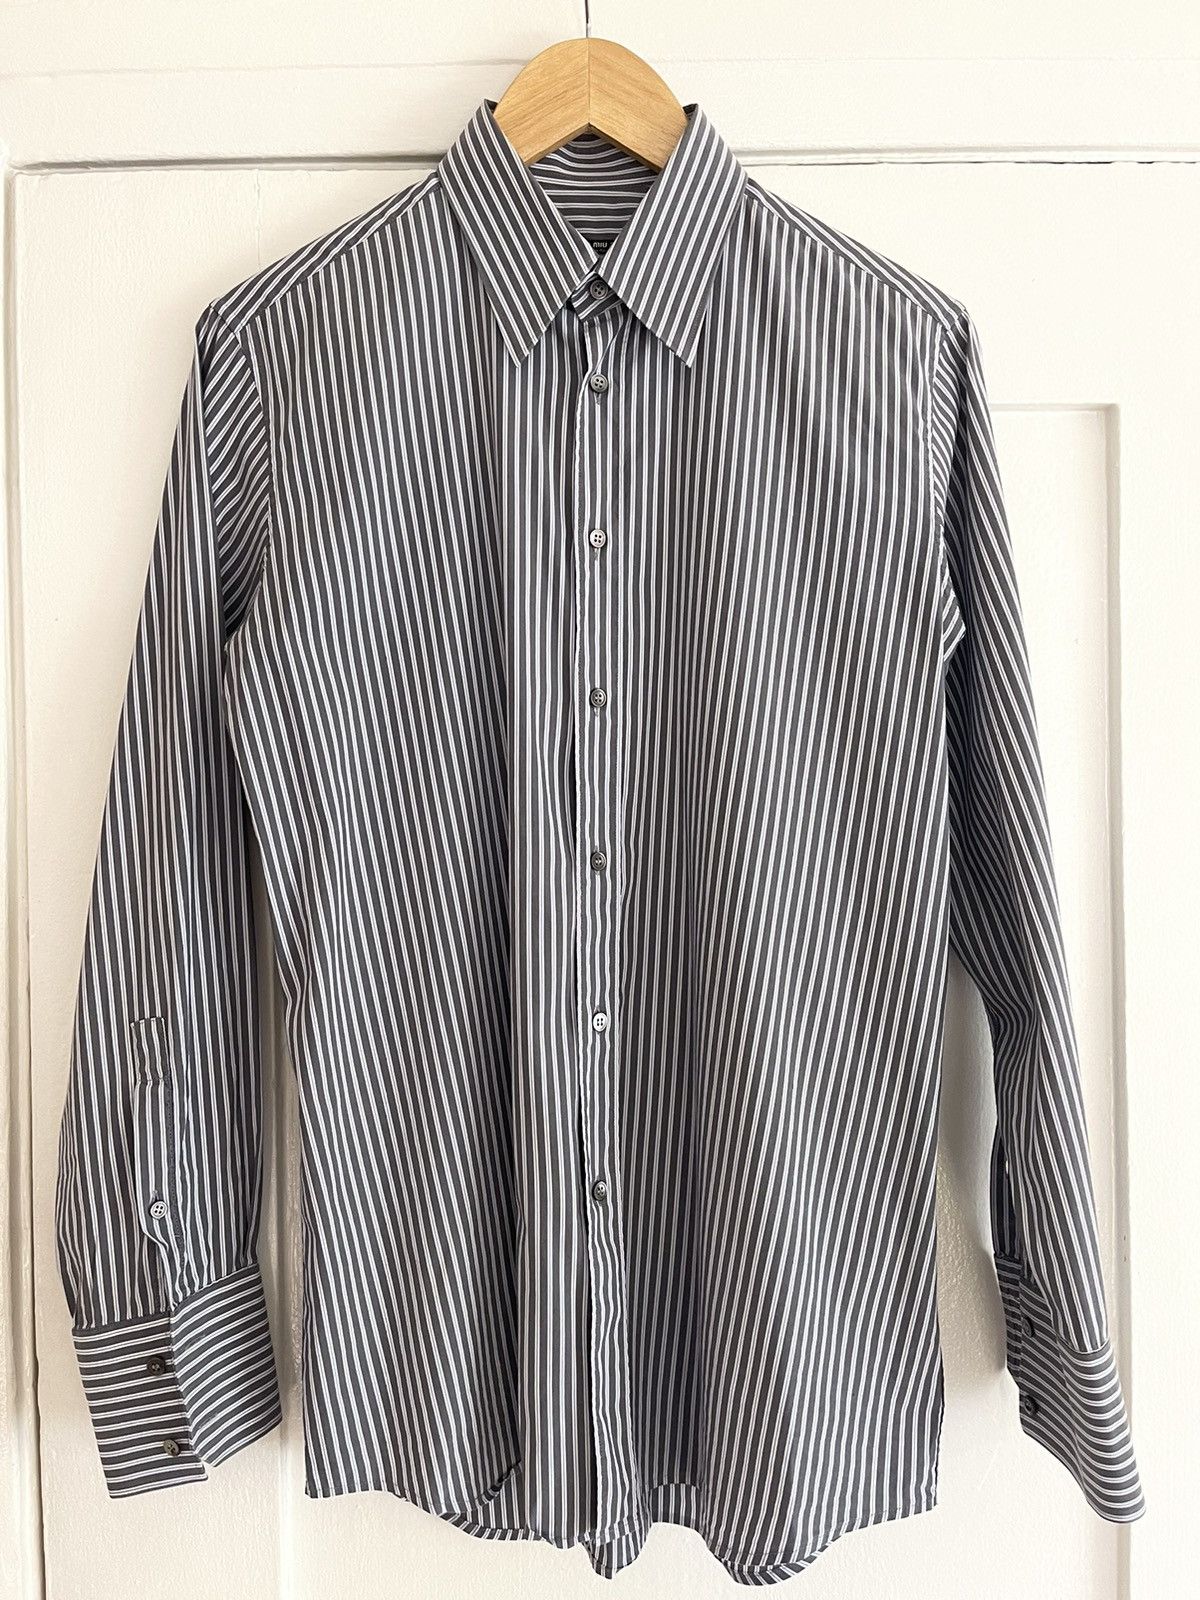 Miu Miu Miu Miu Grey/White/Blue Stripe Button-up Shirt Size XS / US 0-2 / IT 36-38 - 1 Preview